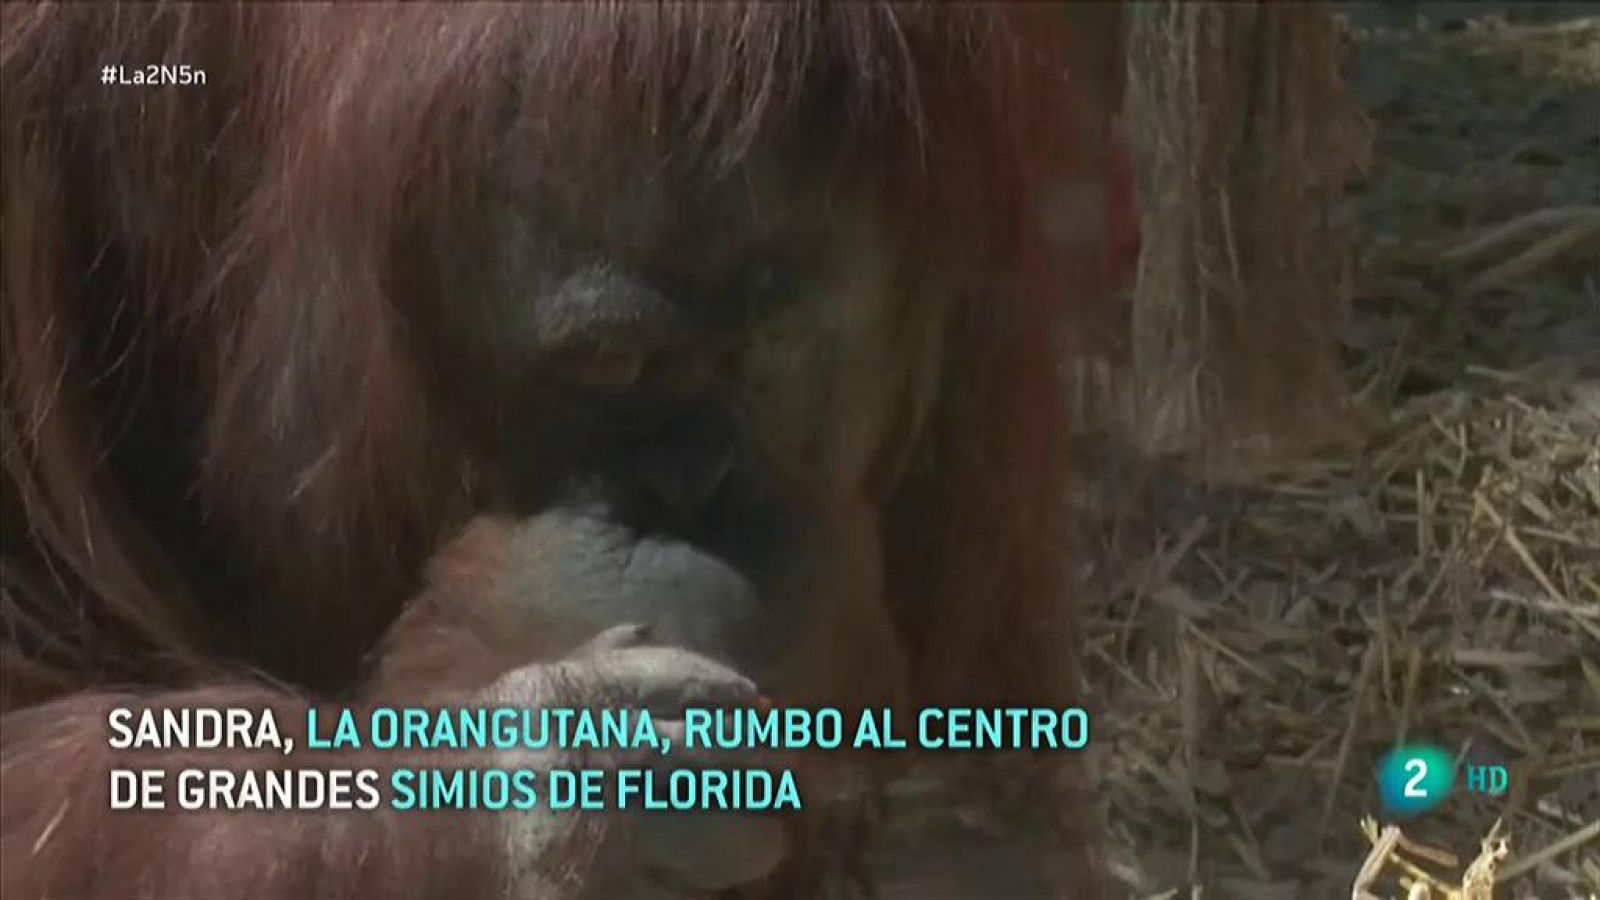 Sandra, la orangutana "persona", rumbo al centro de grandes simios de Florida